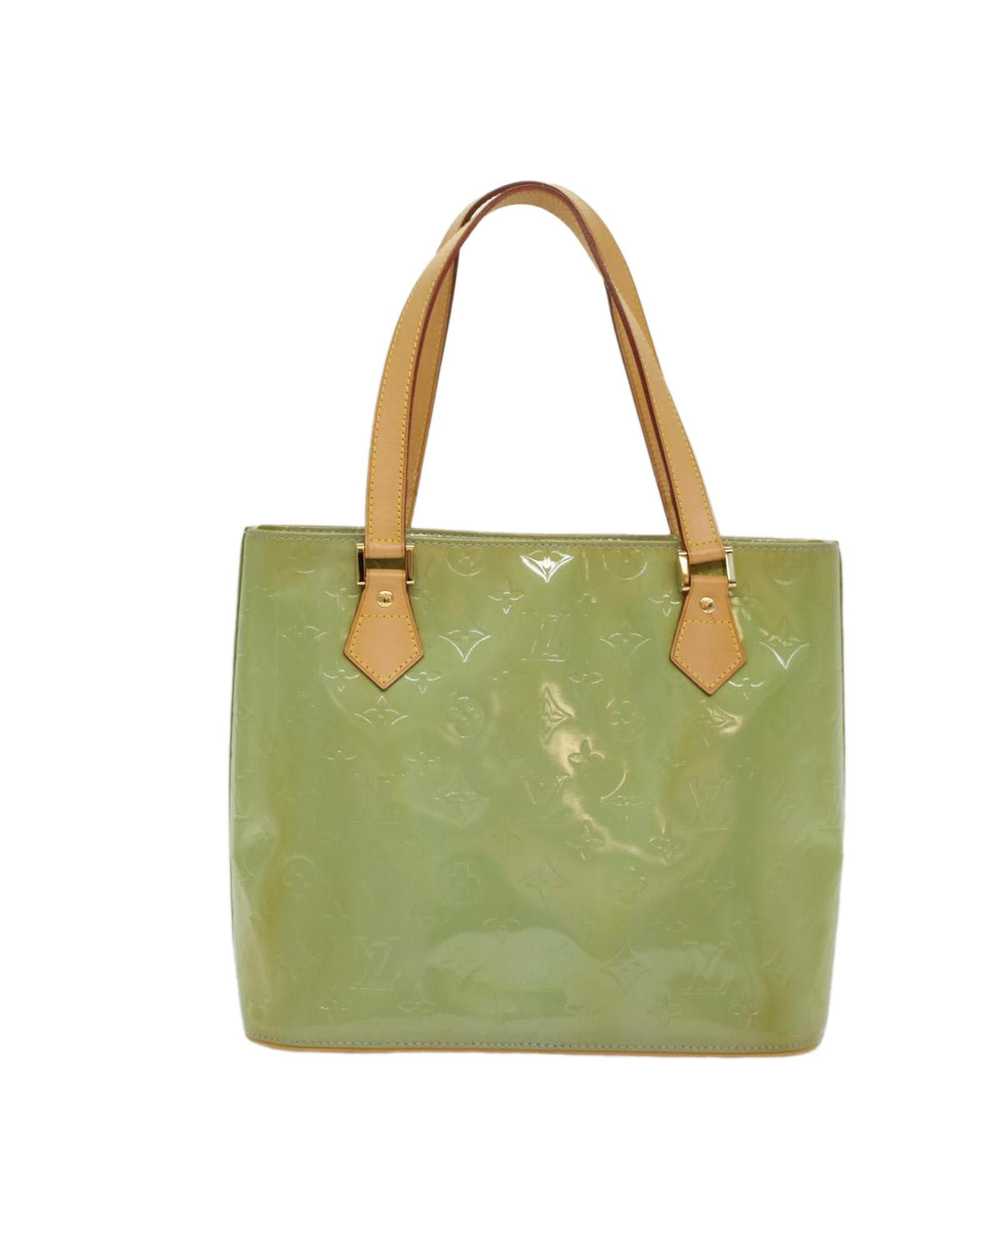 Louis Vuitton Green Patent Leather Handbag - image 3